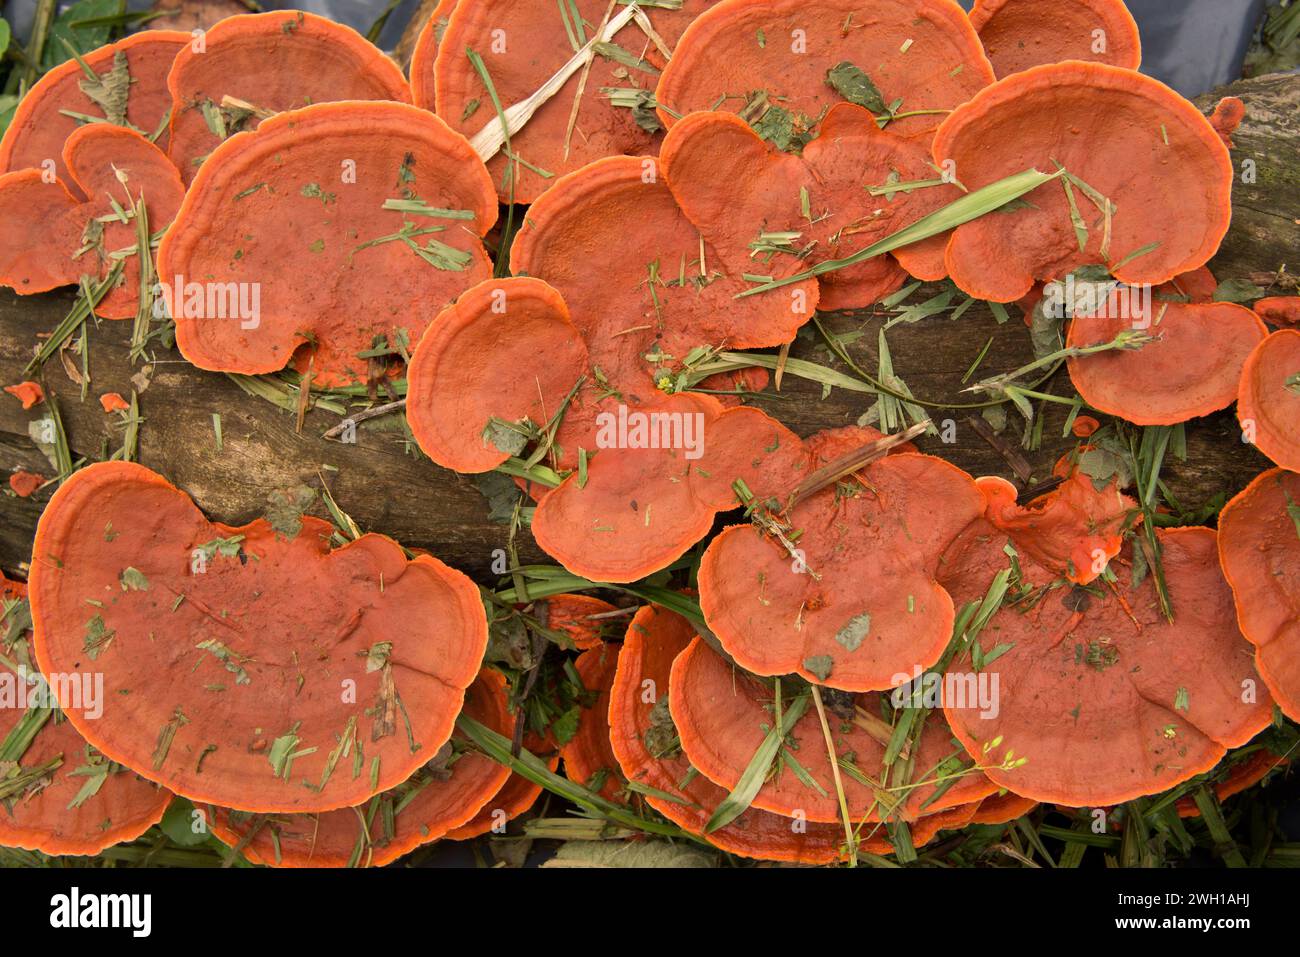 Cinnabar polypore (Pycnoporus sanguineus or Polyporus sanguineus) is a medicinal saprophytic fungus. This photo was taken in Iguazu, Argentina. Stock Photo